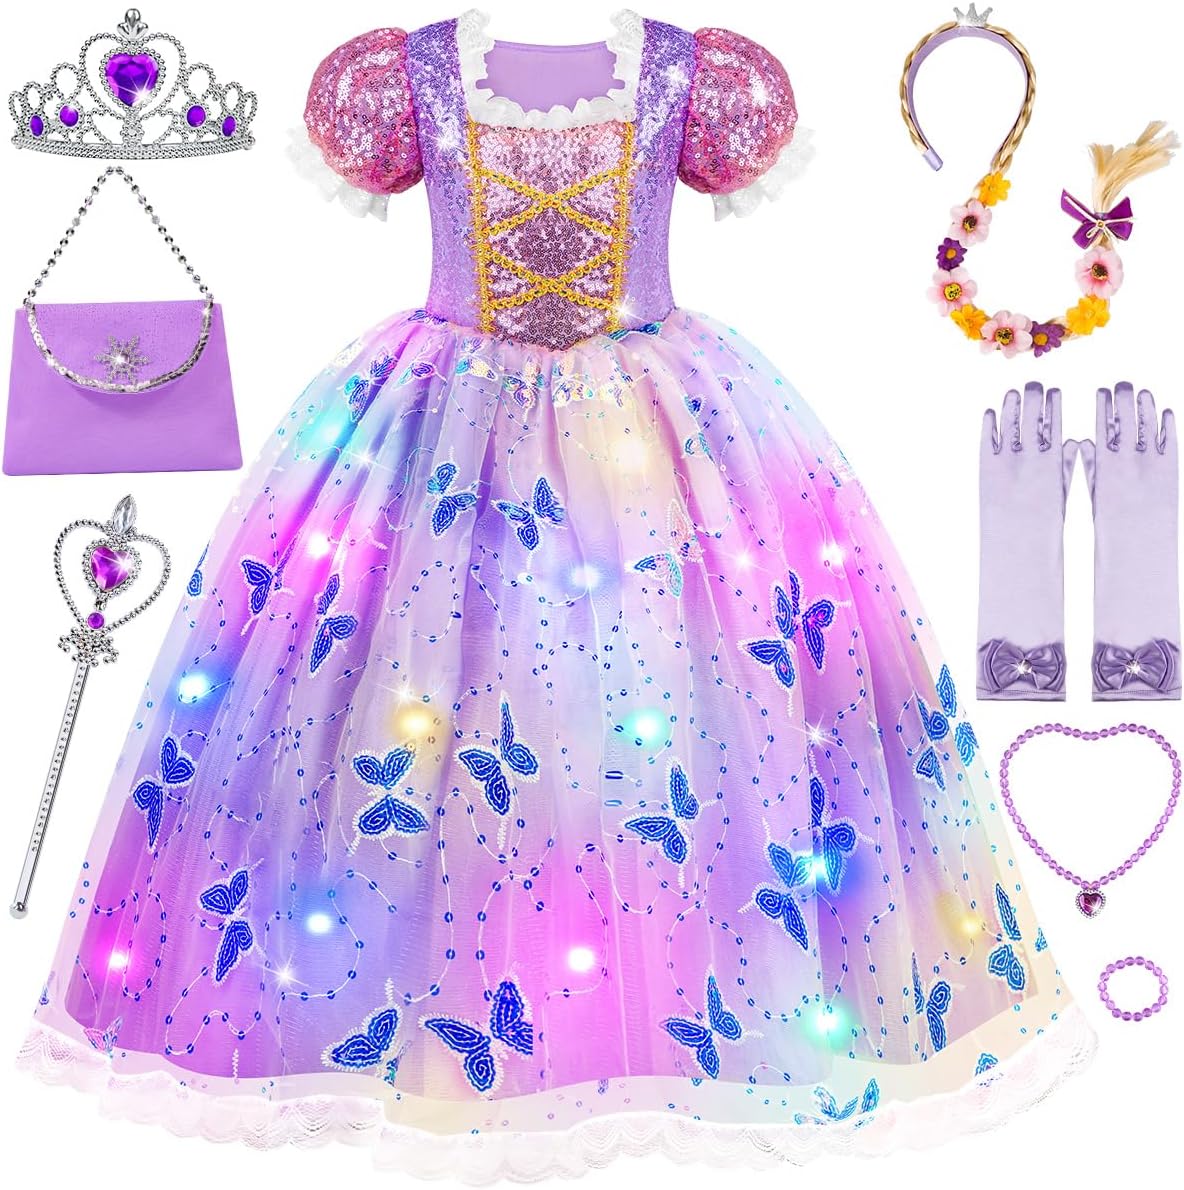 Princess Dresses for Girls - Light Up Princess Costume for Little Girls